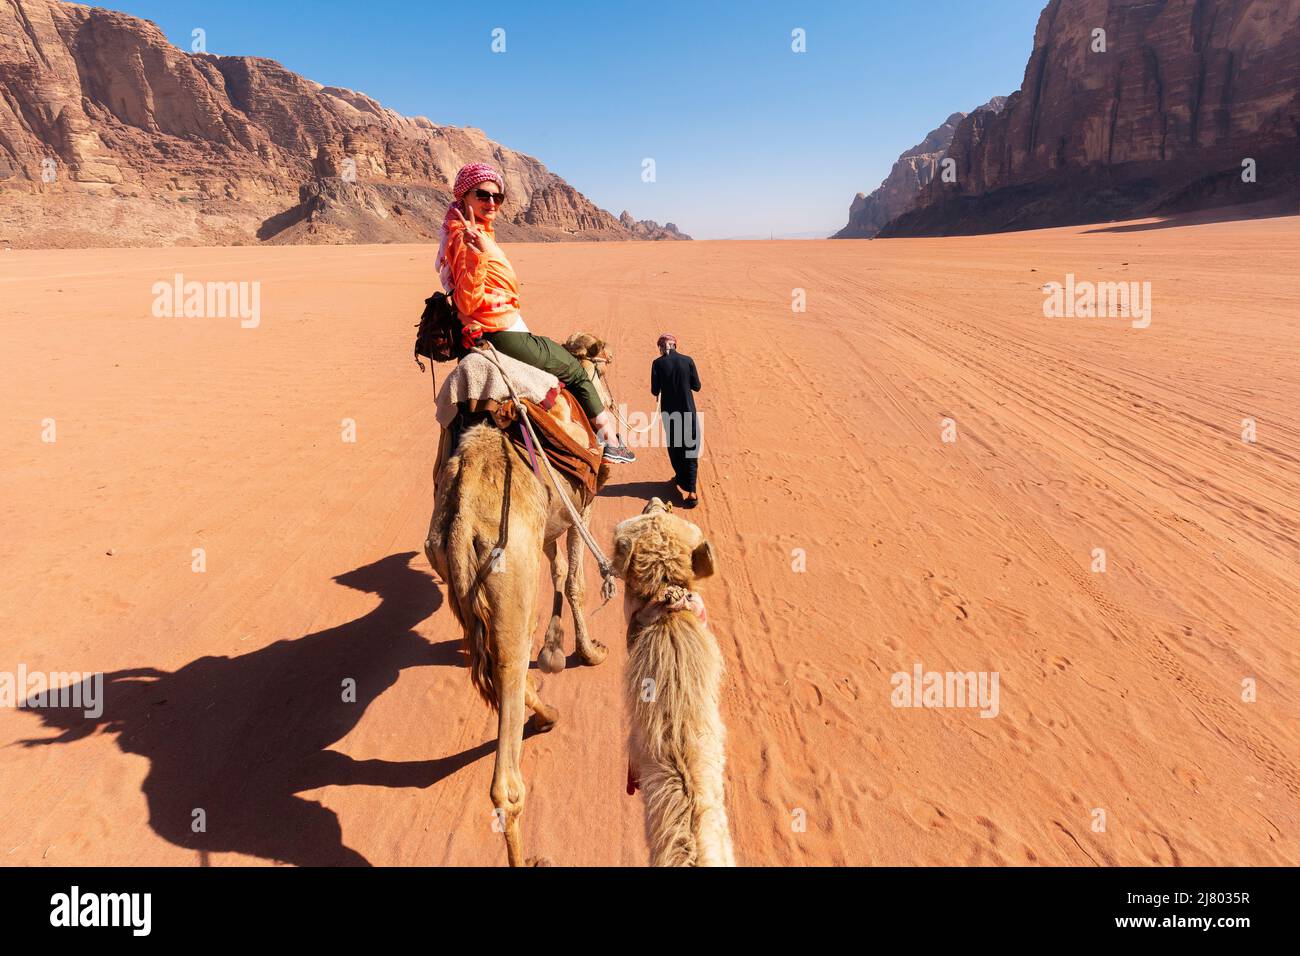 beautiful young woman tourist in white dress riding on camel in wadi rum desert, Jordan Stock Photo